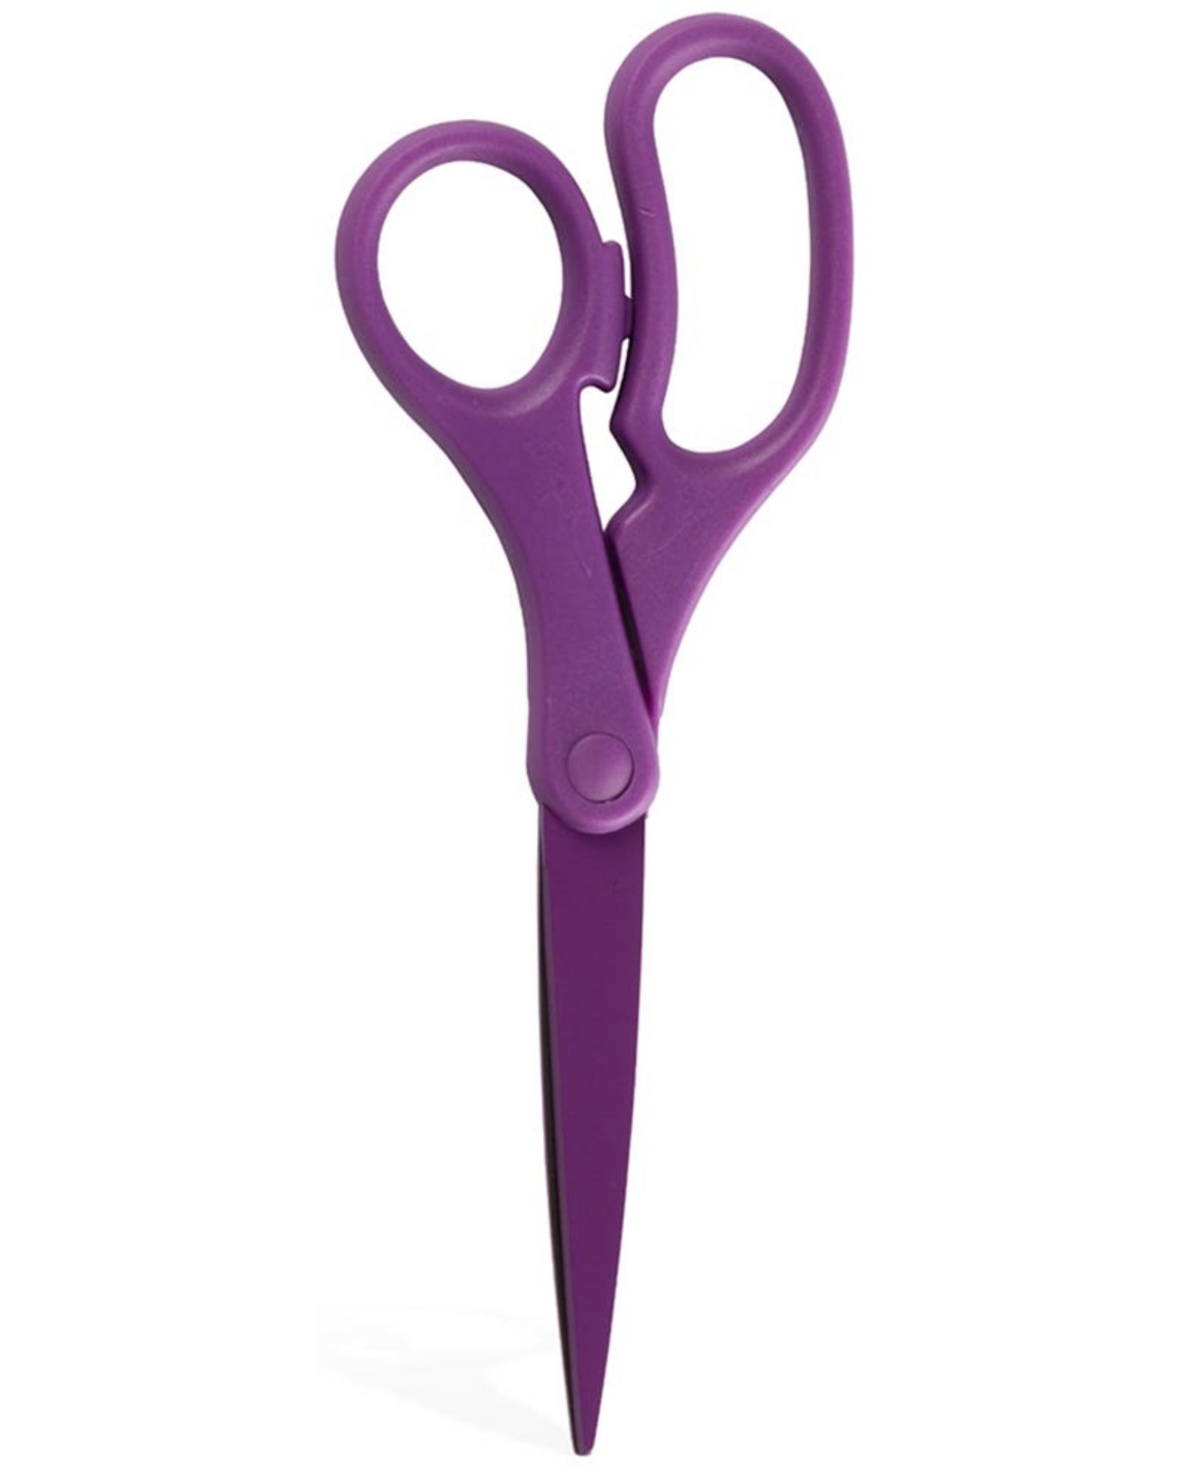 Multi-Purpose Precision Scissors - 8" - Ergonomic Handle Stainless Steel Blades - Sold Individually - Purple